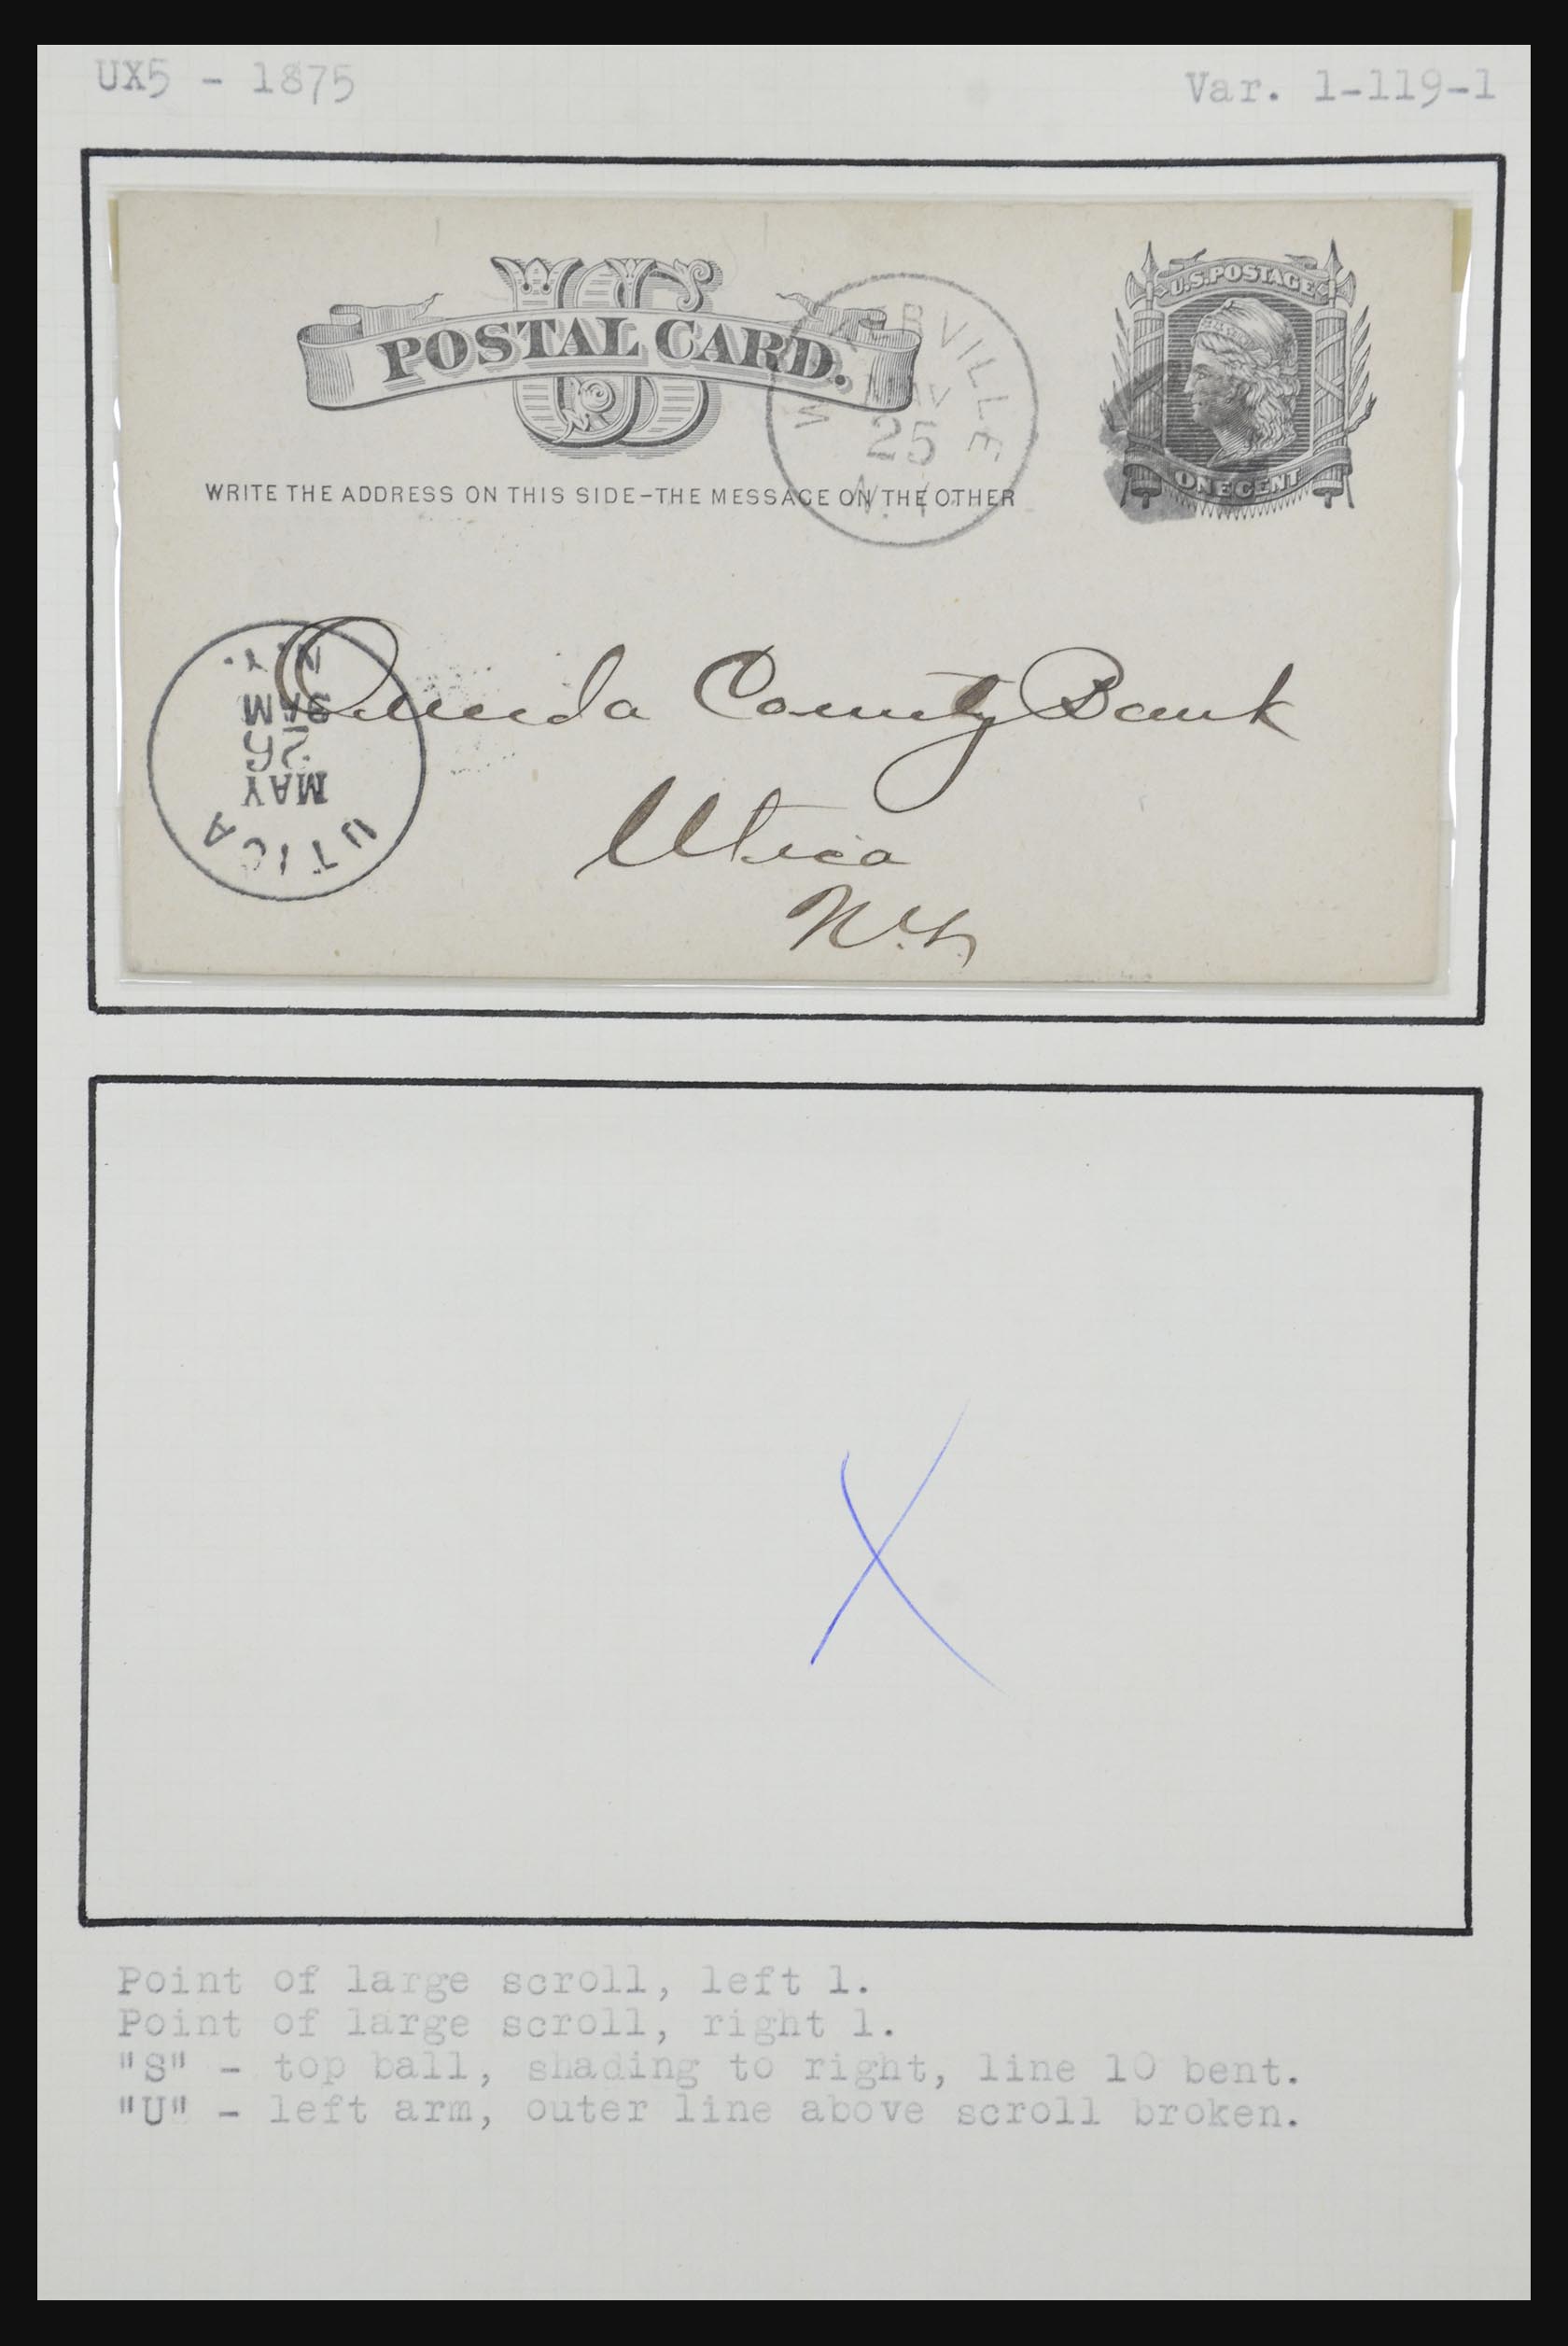 32209 084 - 32209 USA postal cards 1873-1950.